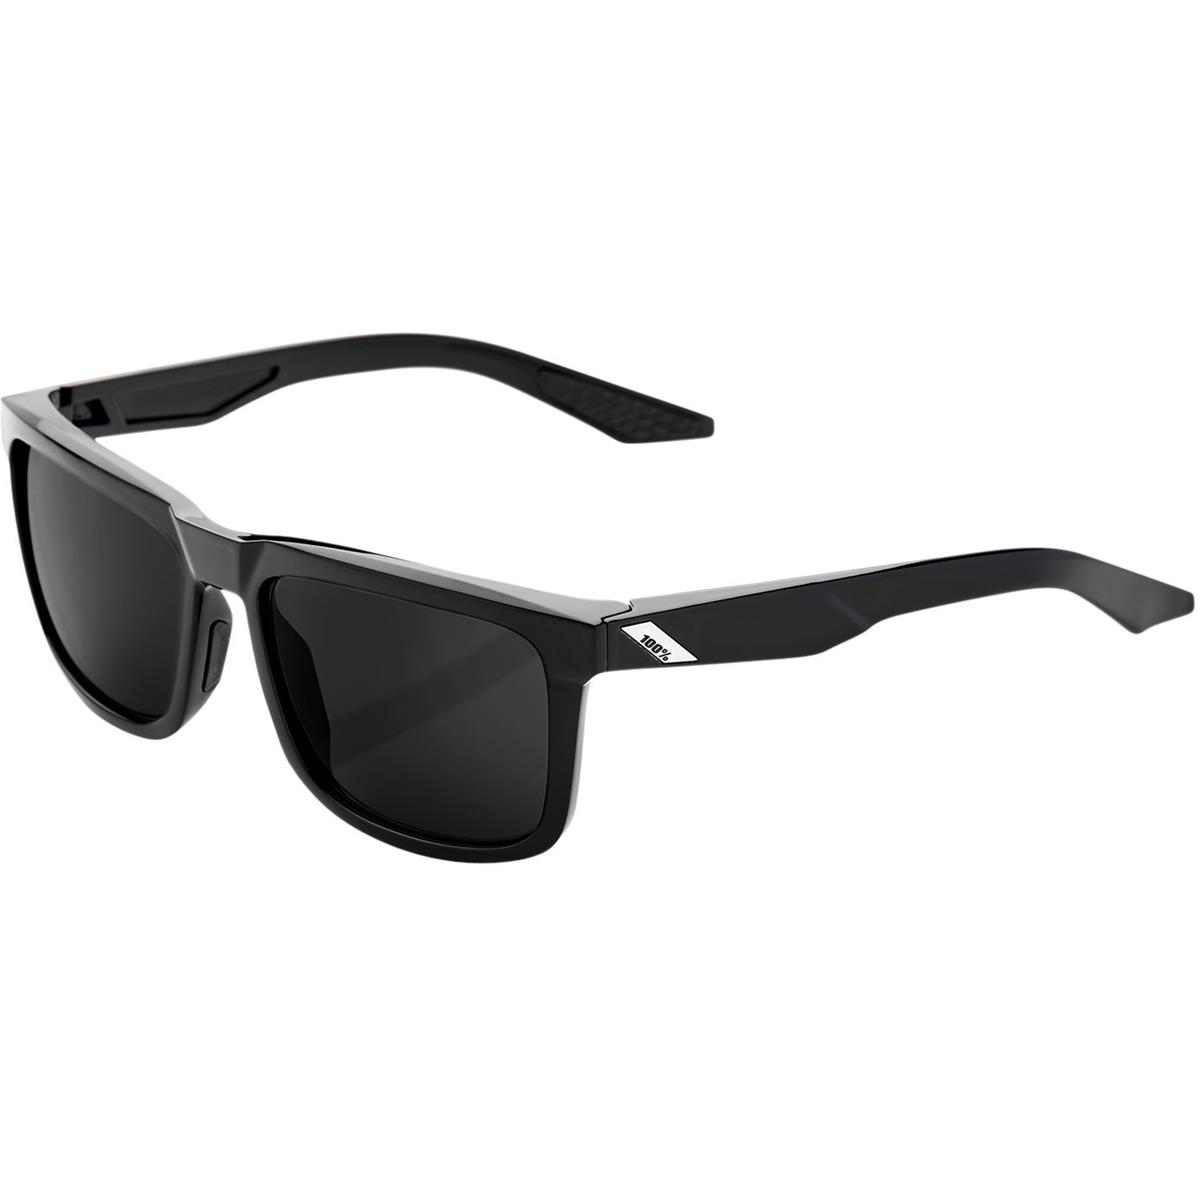 100% Sunglasses Blake Polished Black - Peakpolar Lens